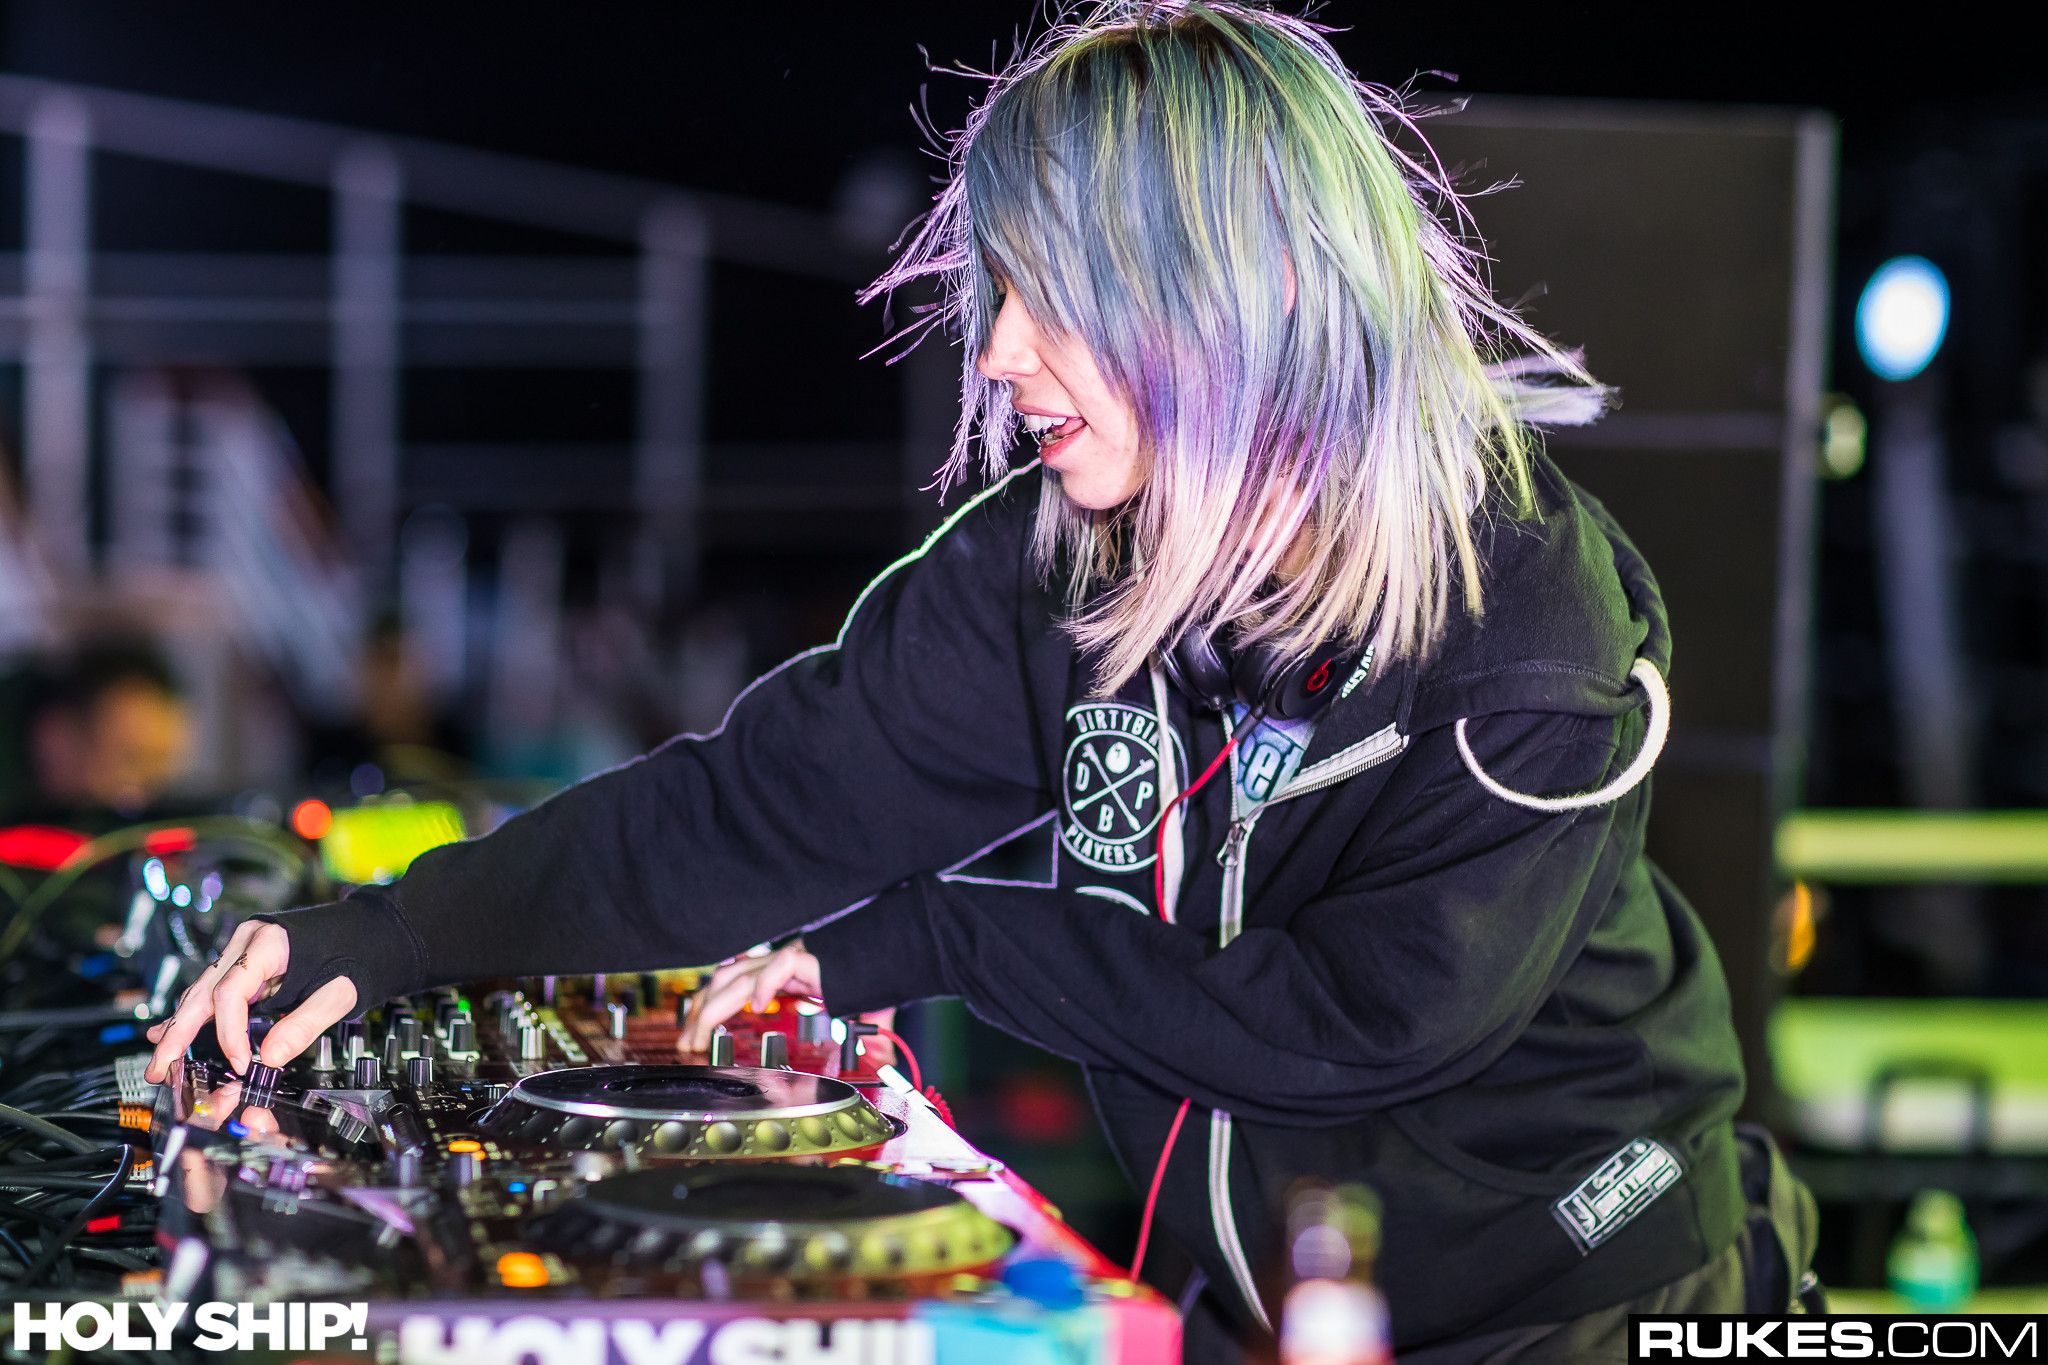 Holy Ship Mija Dyed Hair Rukes DJ Mixing Consoles 2048x1365